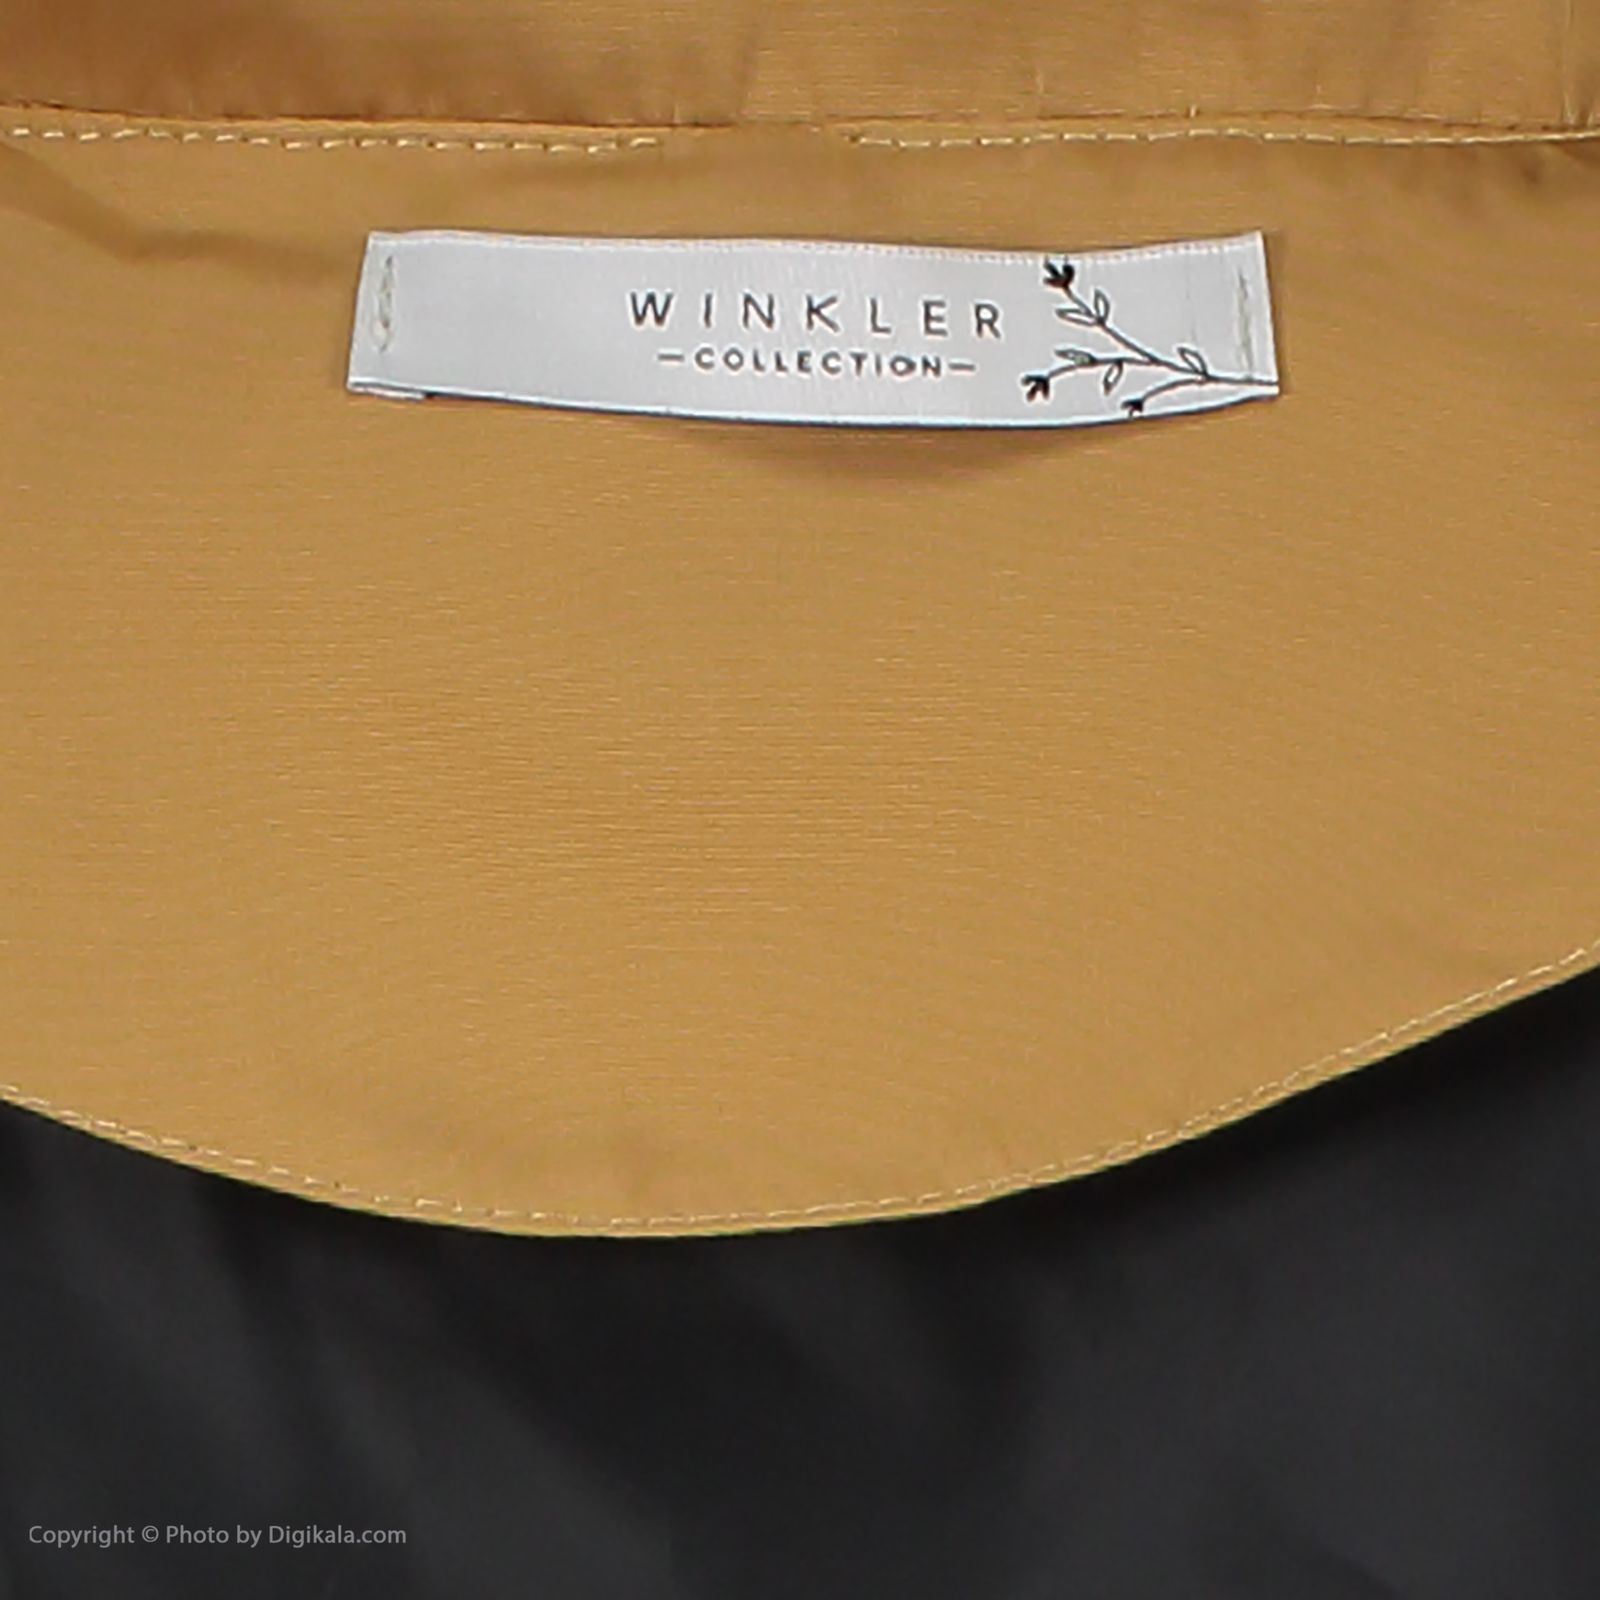 کاپشن زنانه وینکلر مدل W0614009RC  -  - 5